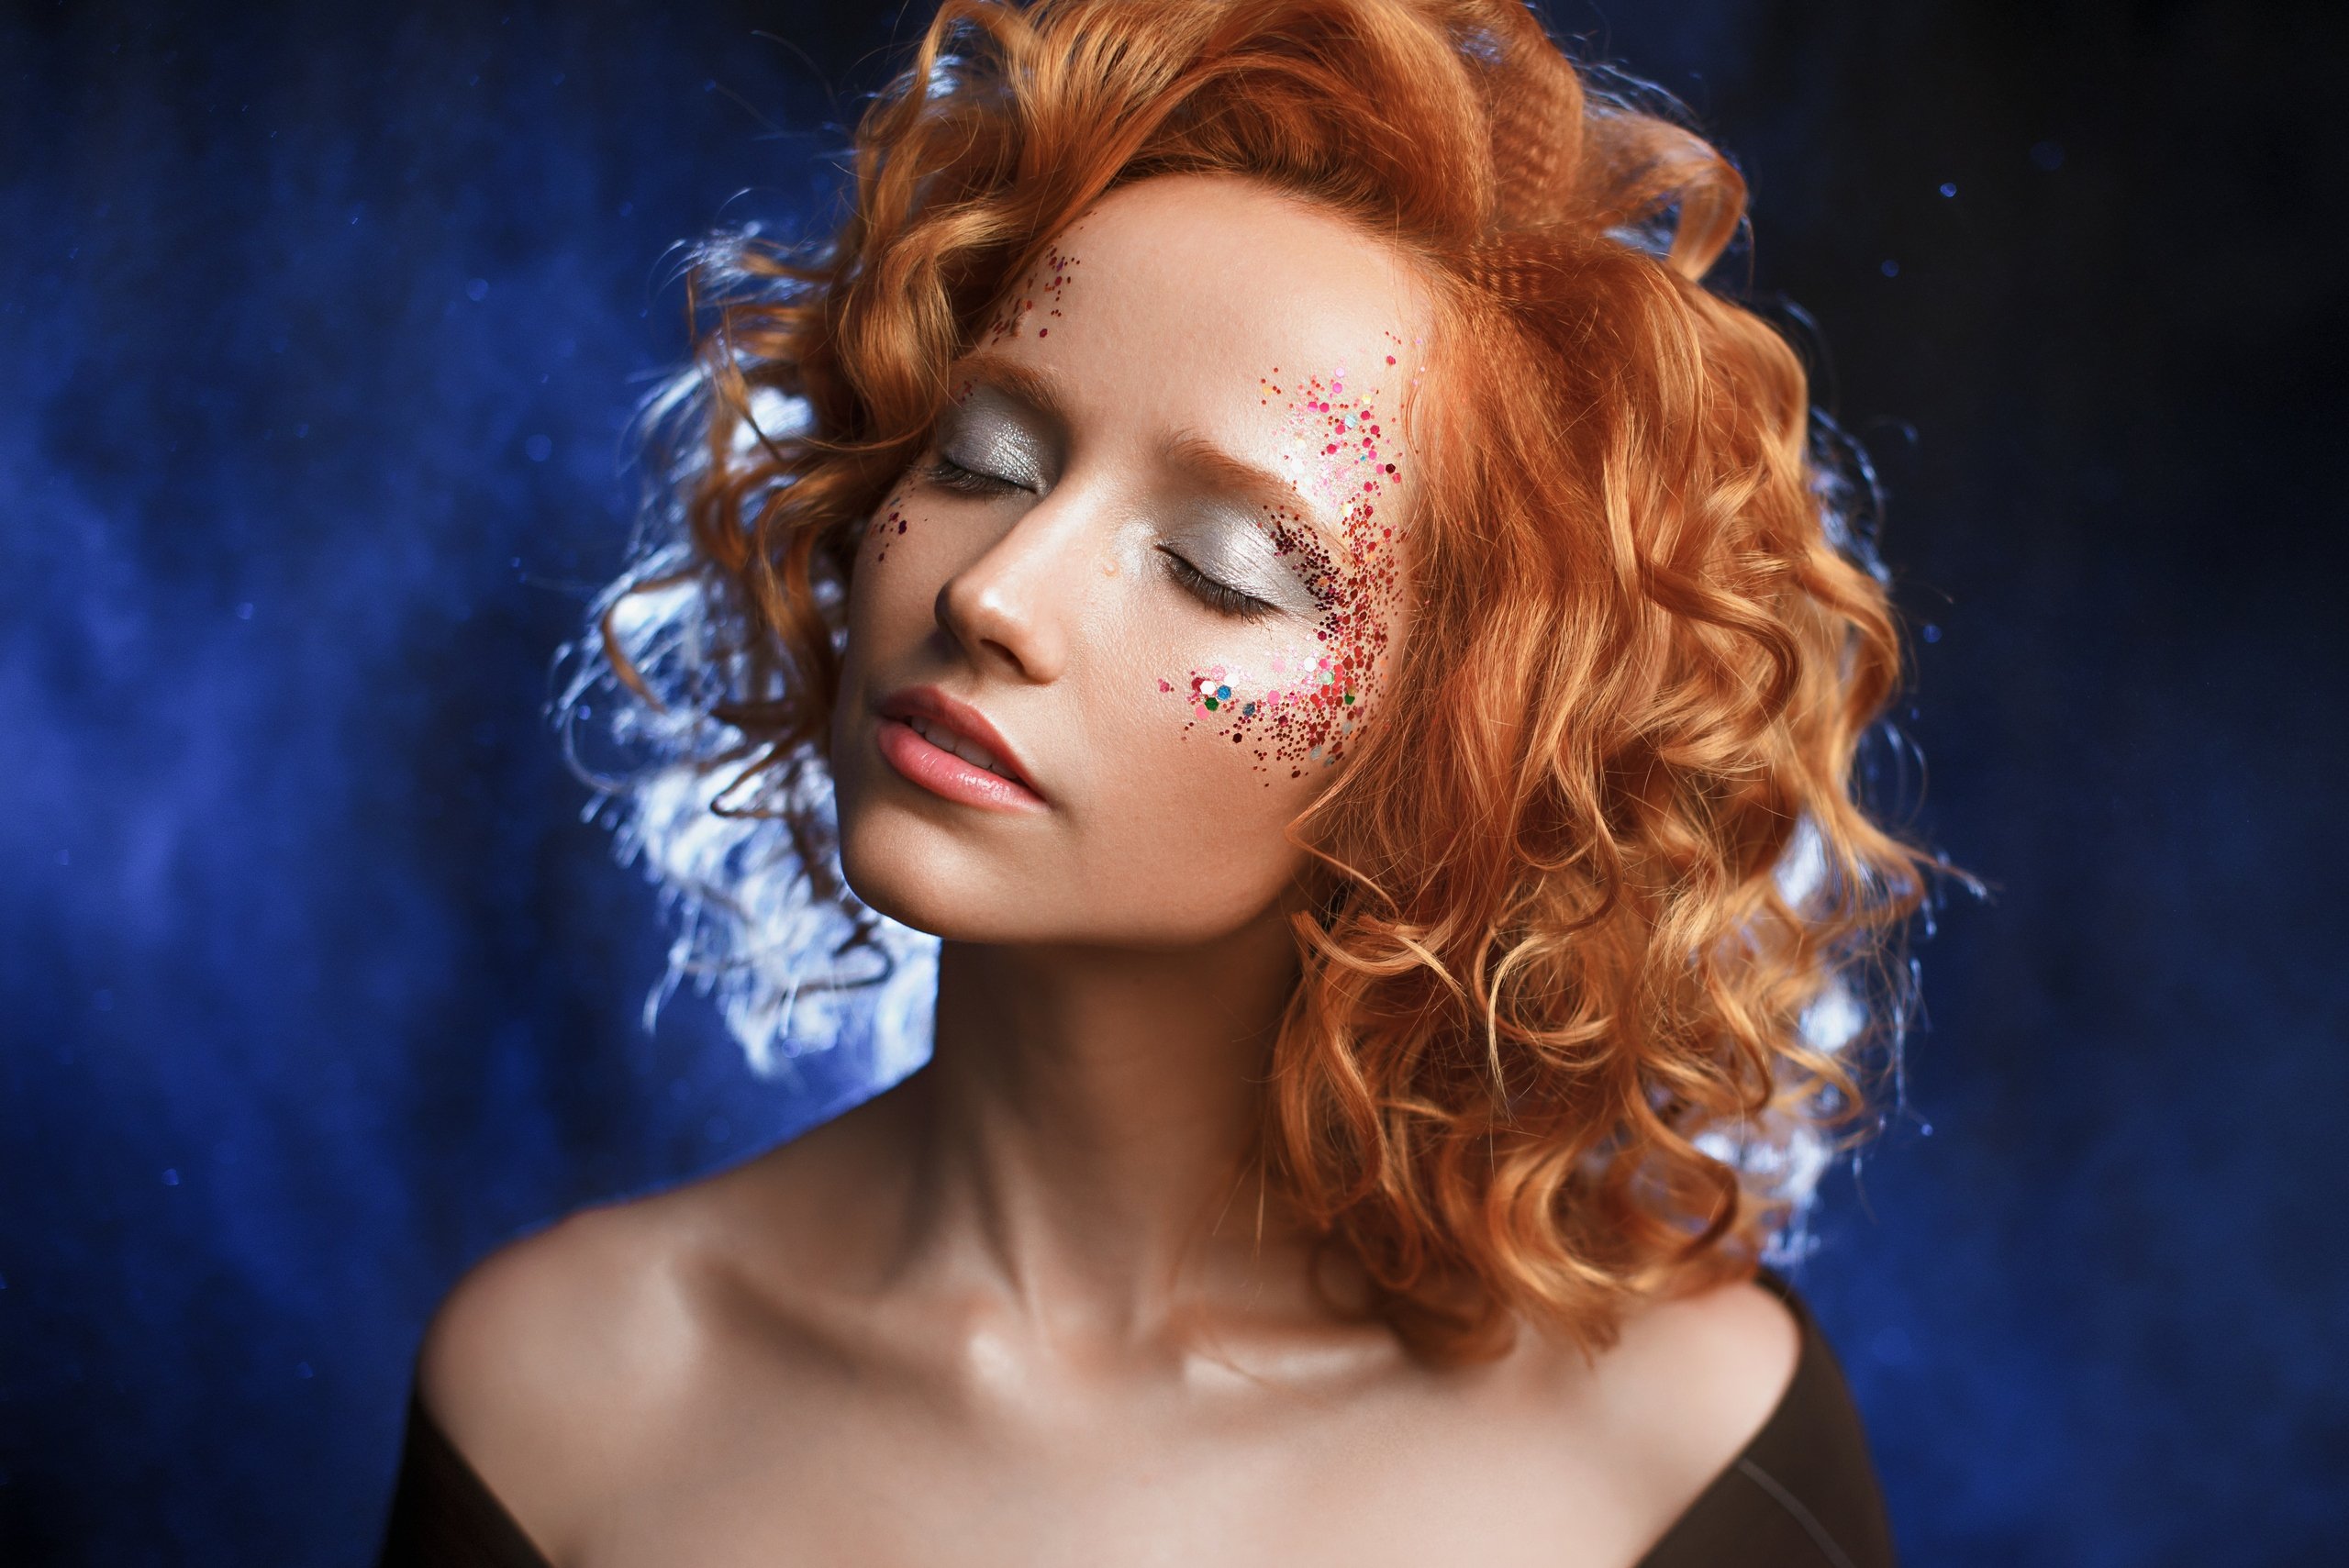 Pavel Cherepko Women Redhead Glamour Glitter Portrait Closeup Model 2560x1709